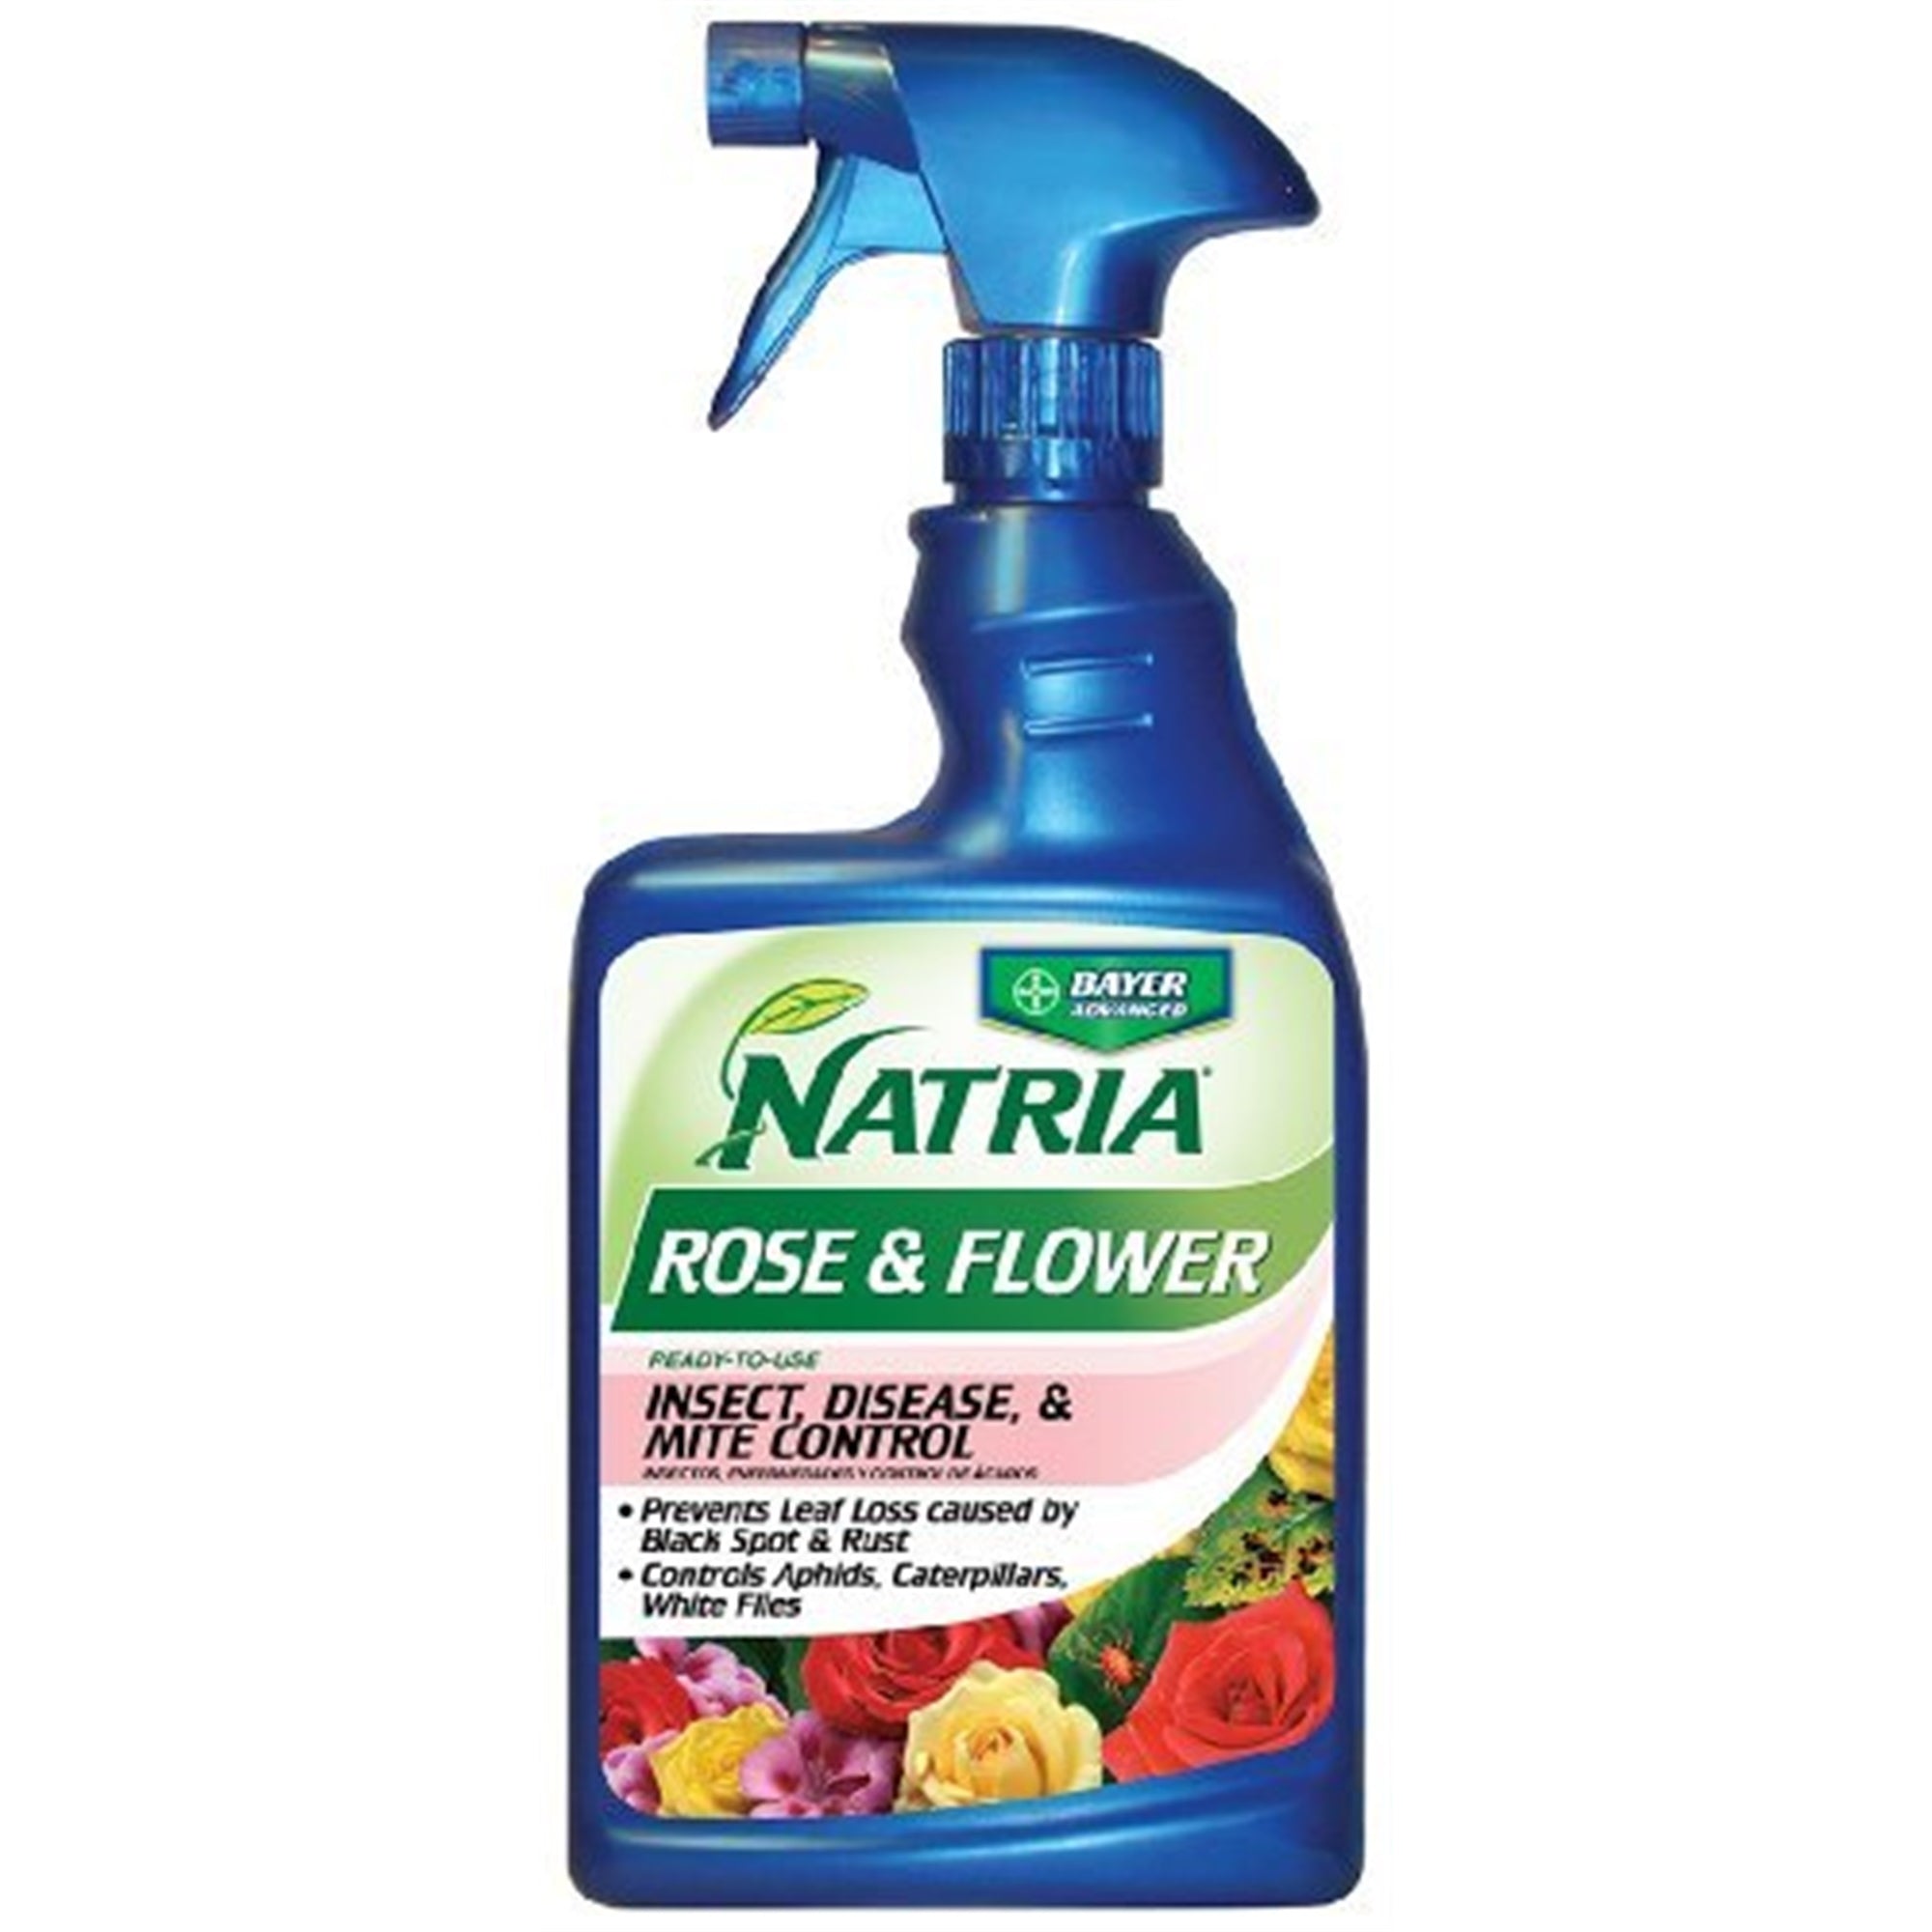 Natria Rose & Flower Insect, Disease, & Mite Control, 24oz RTU Trigger Spray